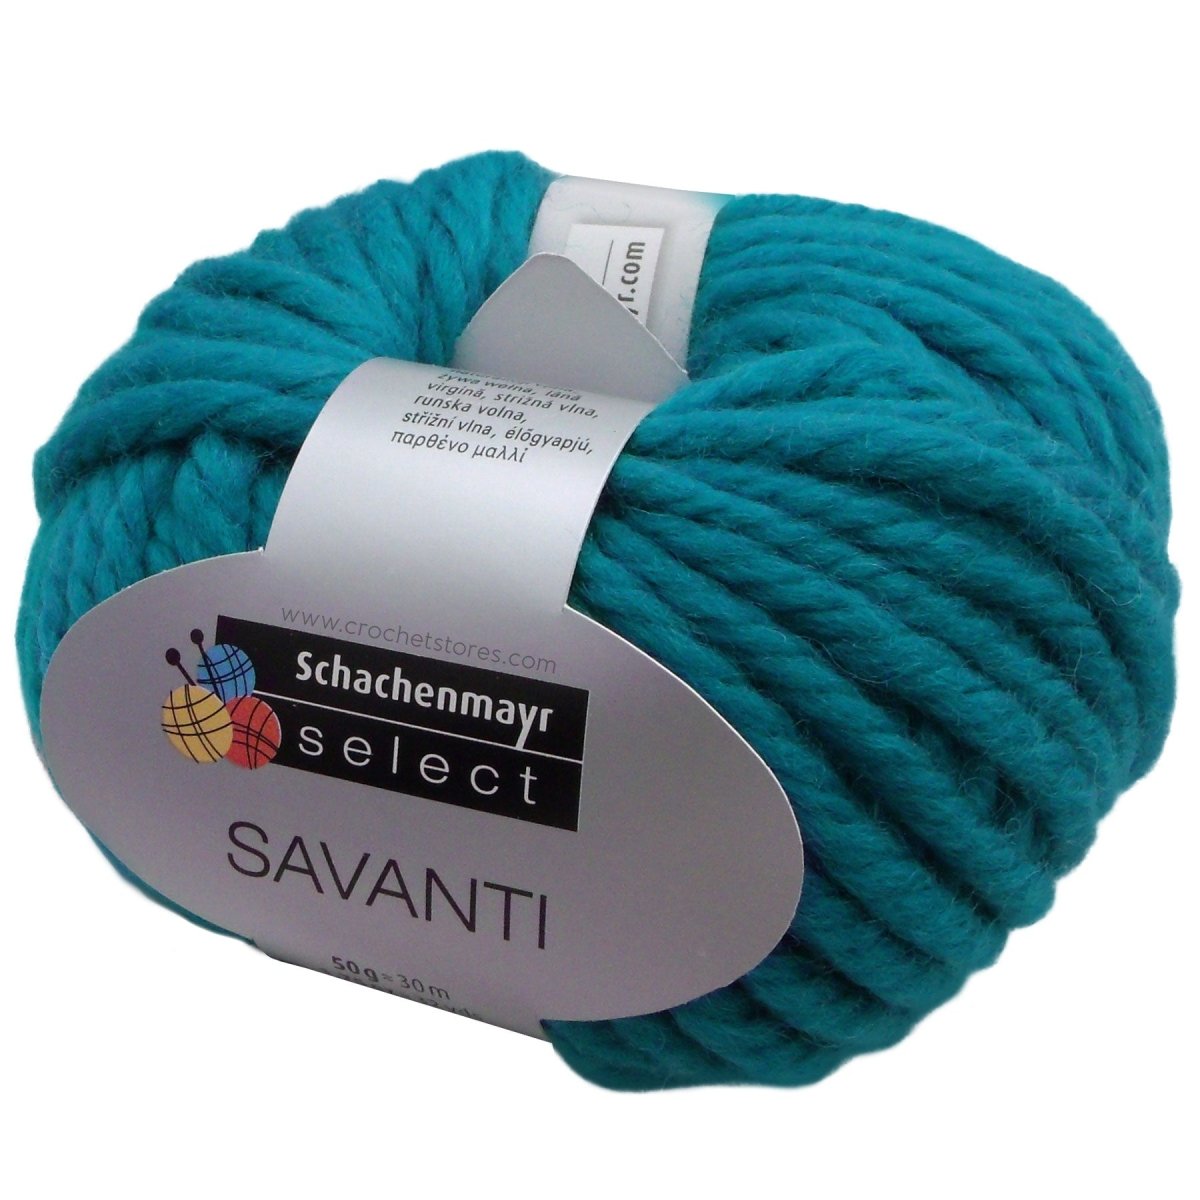 SAVANTI - Crochetstores9811771-47804082700488322